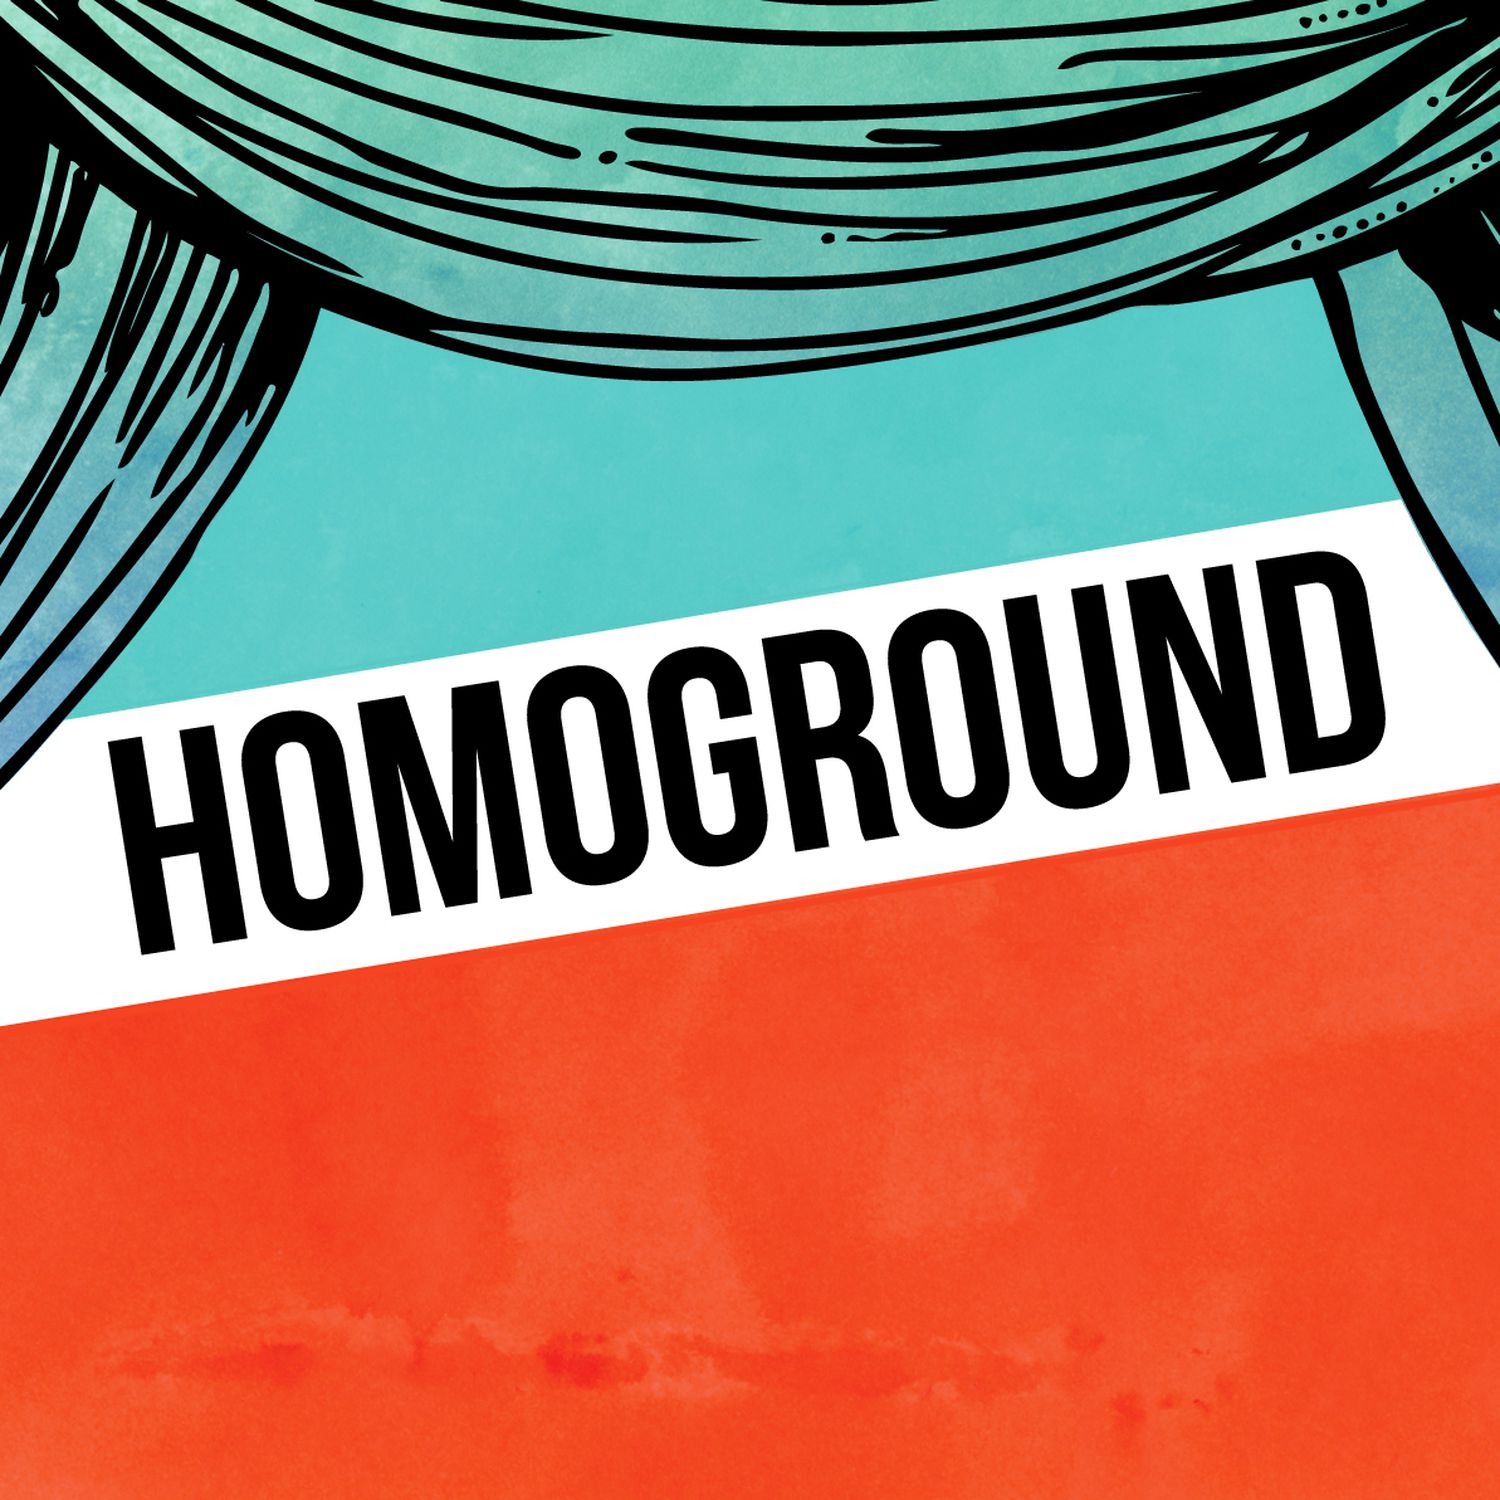 HOMOGROUND - queer music radio (LGBTQ) podcast show image